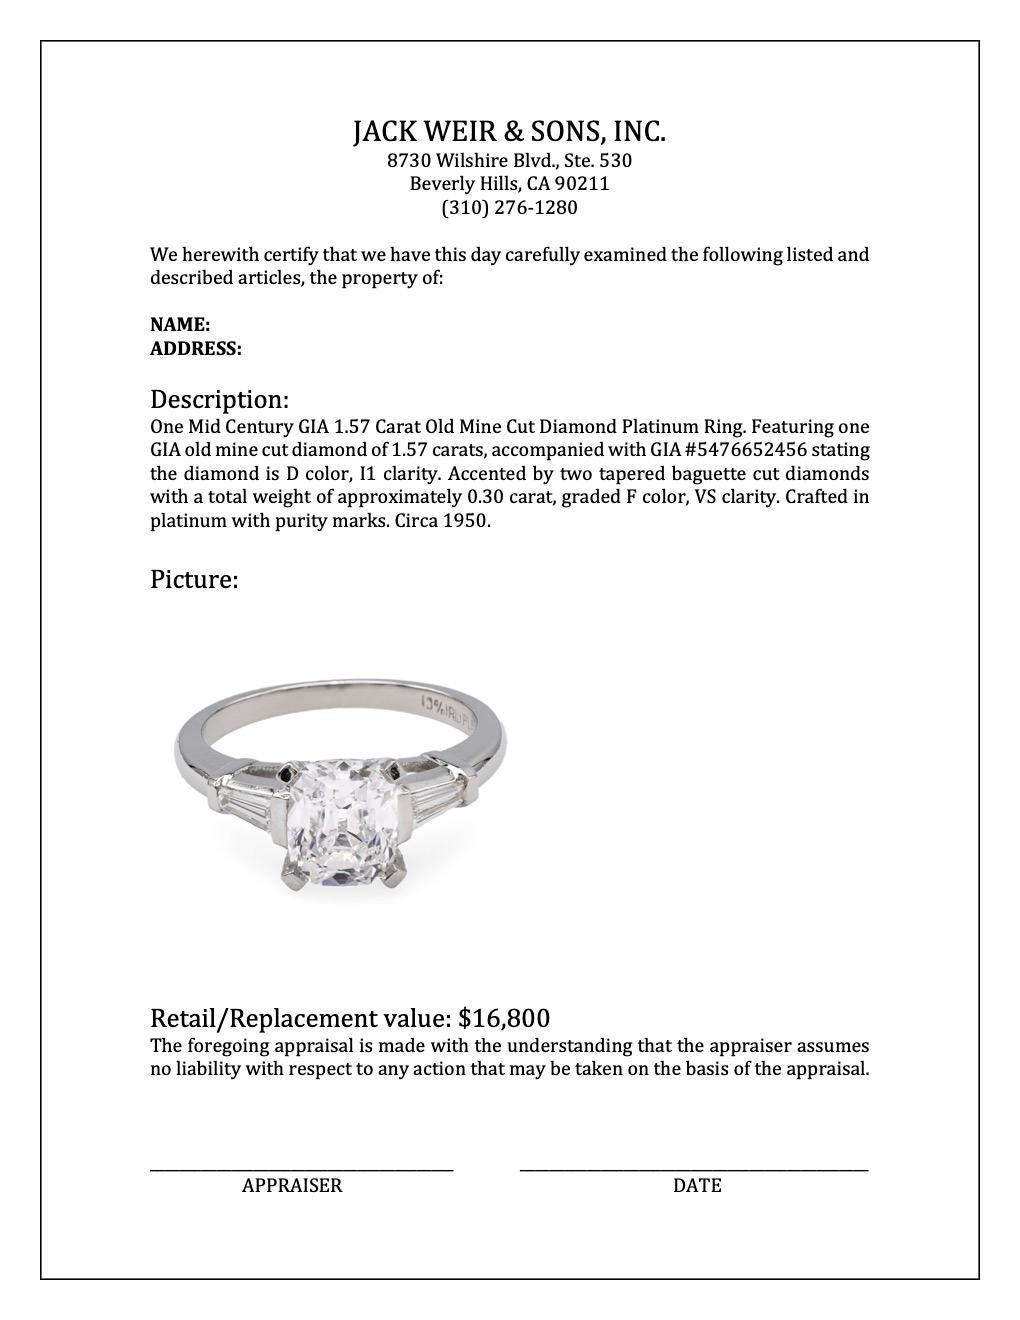 Mid Century GIA 1.57 Carat Old Mine Cut Diamond Platinum Ring 3